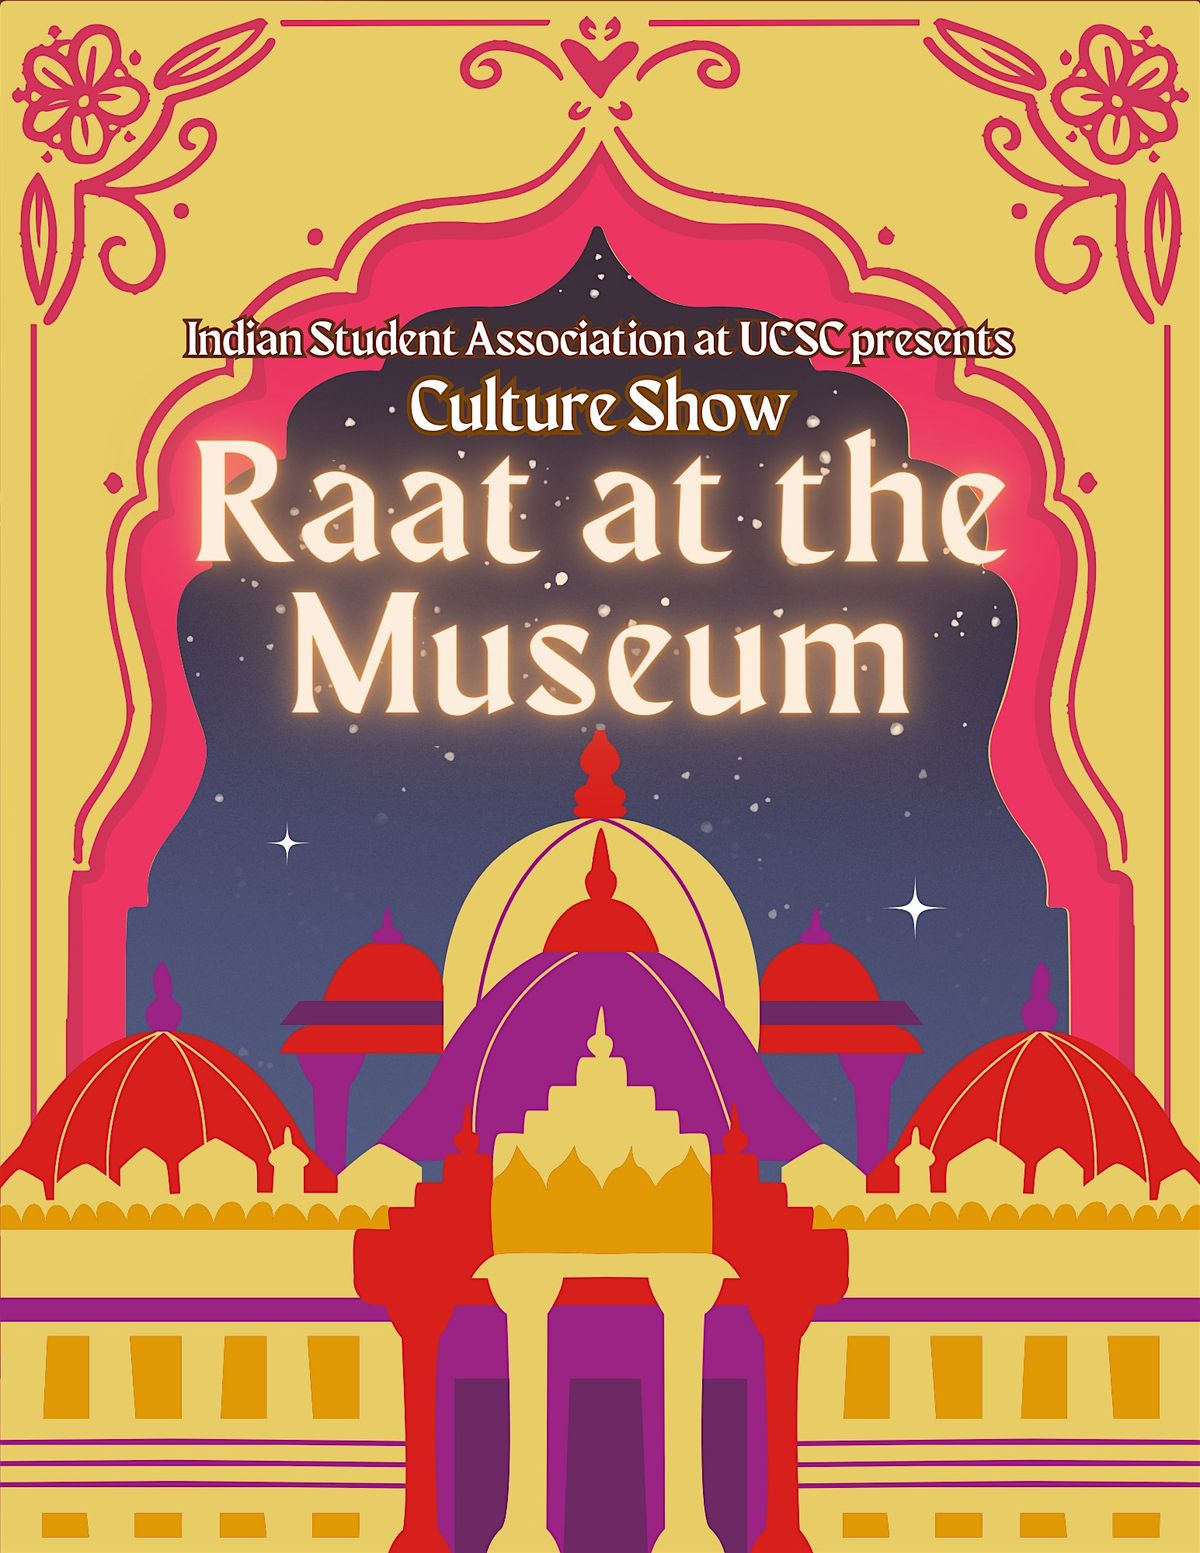 Indian Student Association's Culture Show